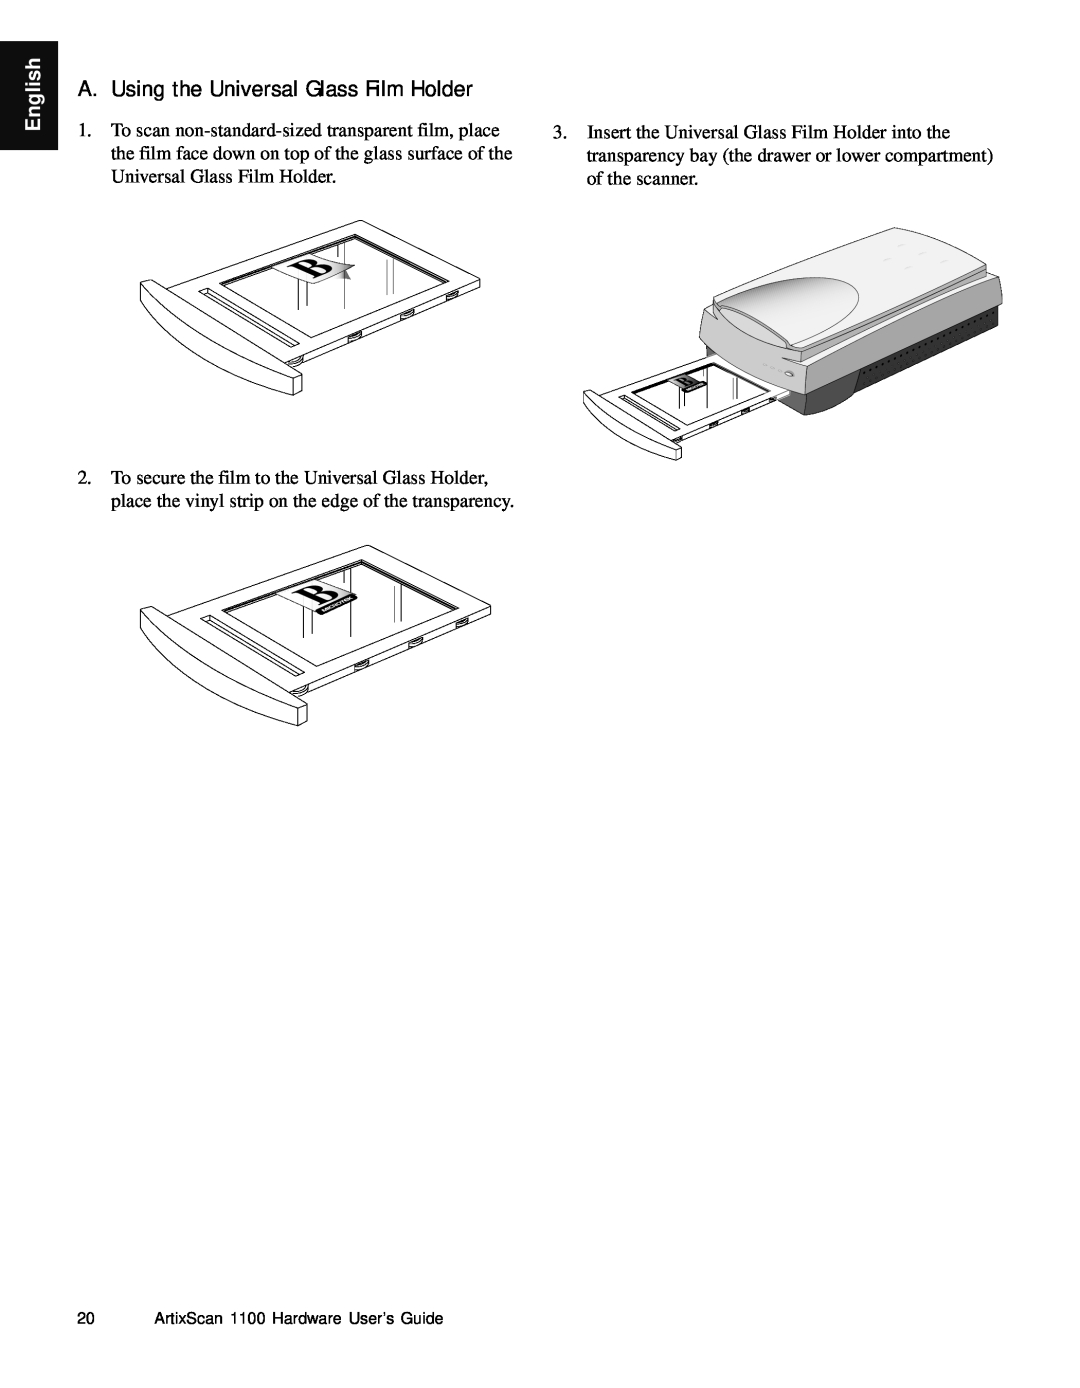 Microtek Artix Scan1100 manual A. Using the Universal Glass Film Holder, English, ArtixScan 1100 Hardware User’s Guide 